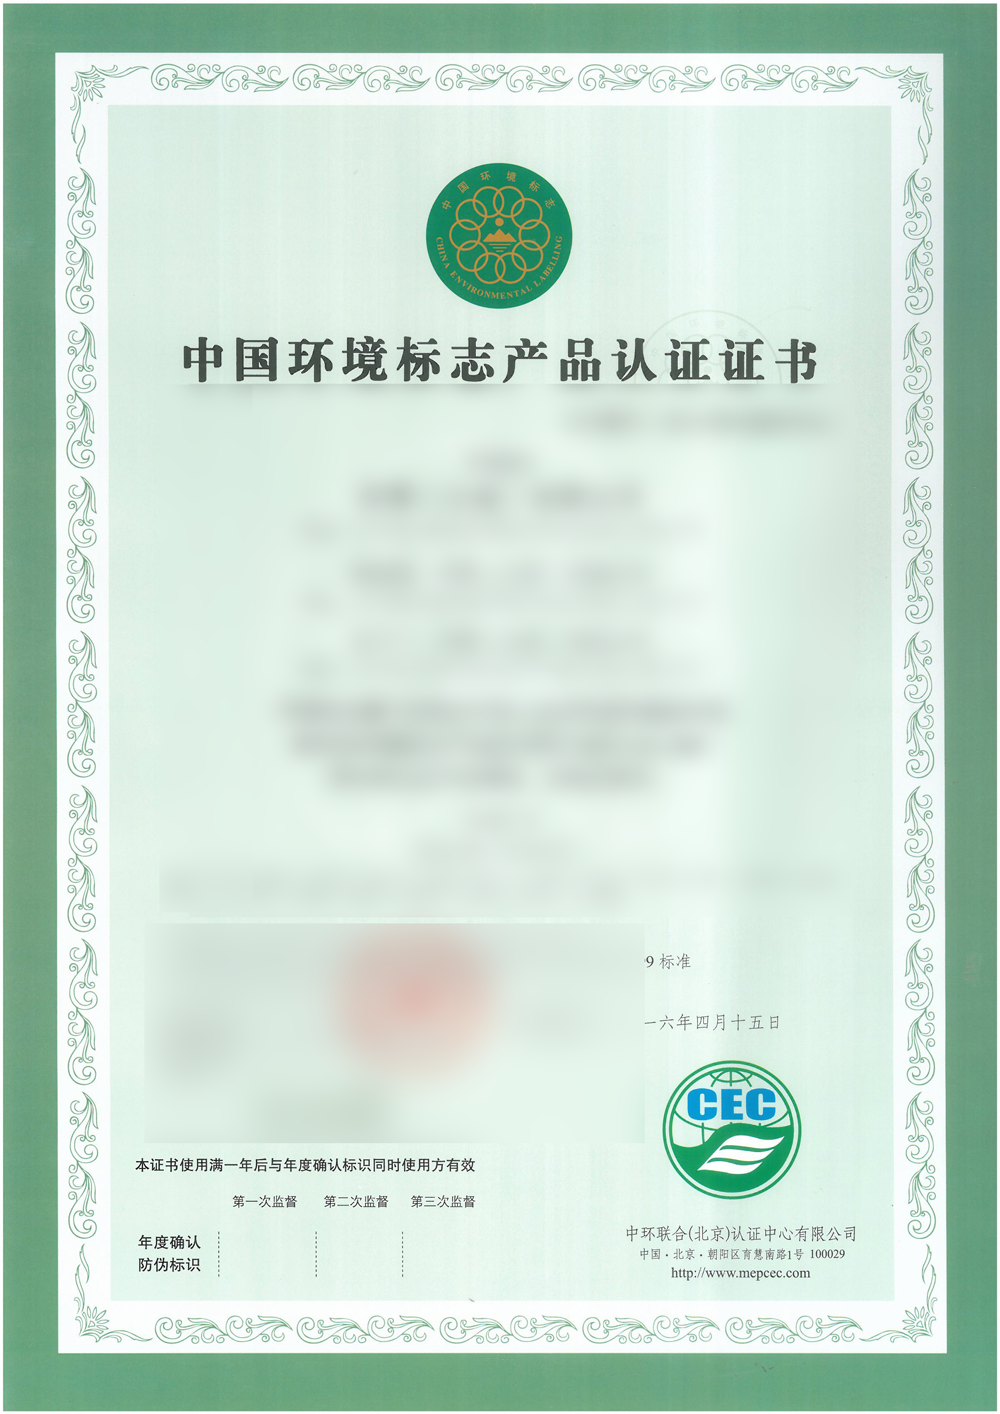 Honorary certificate 2